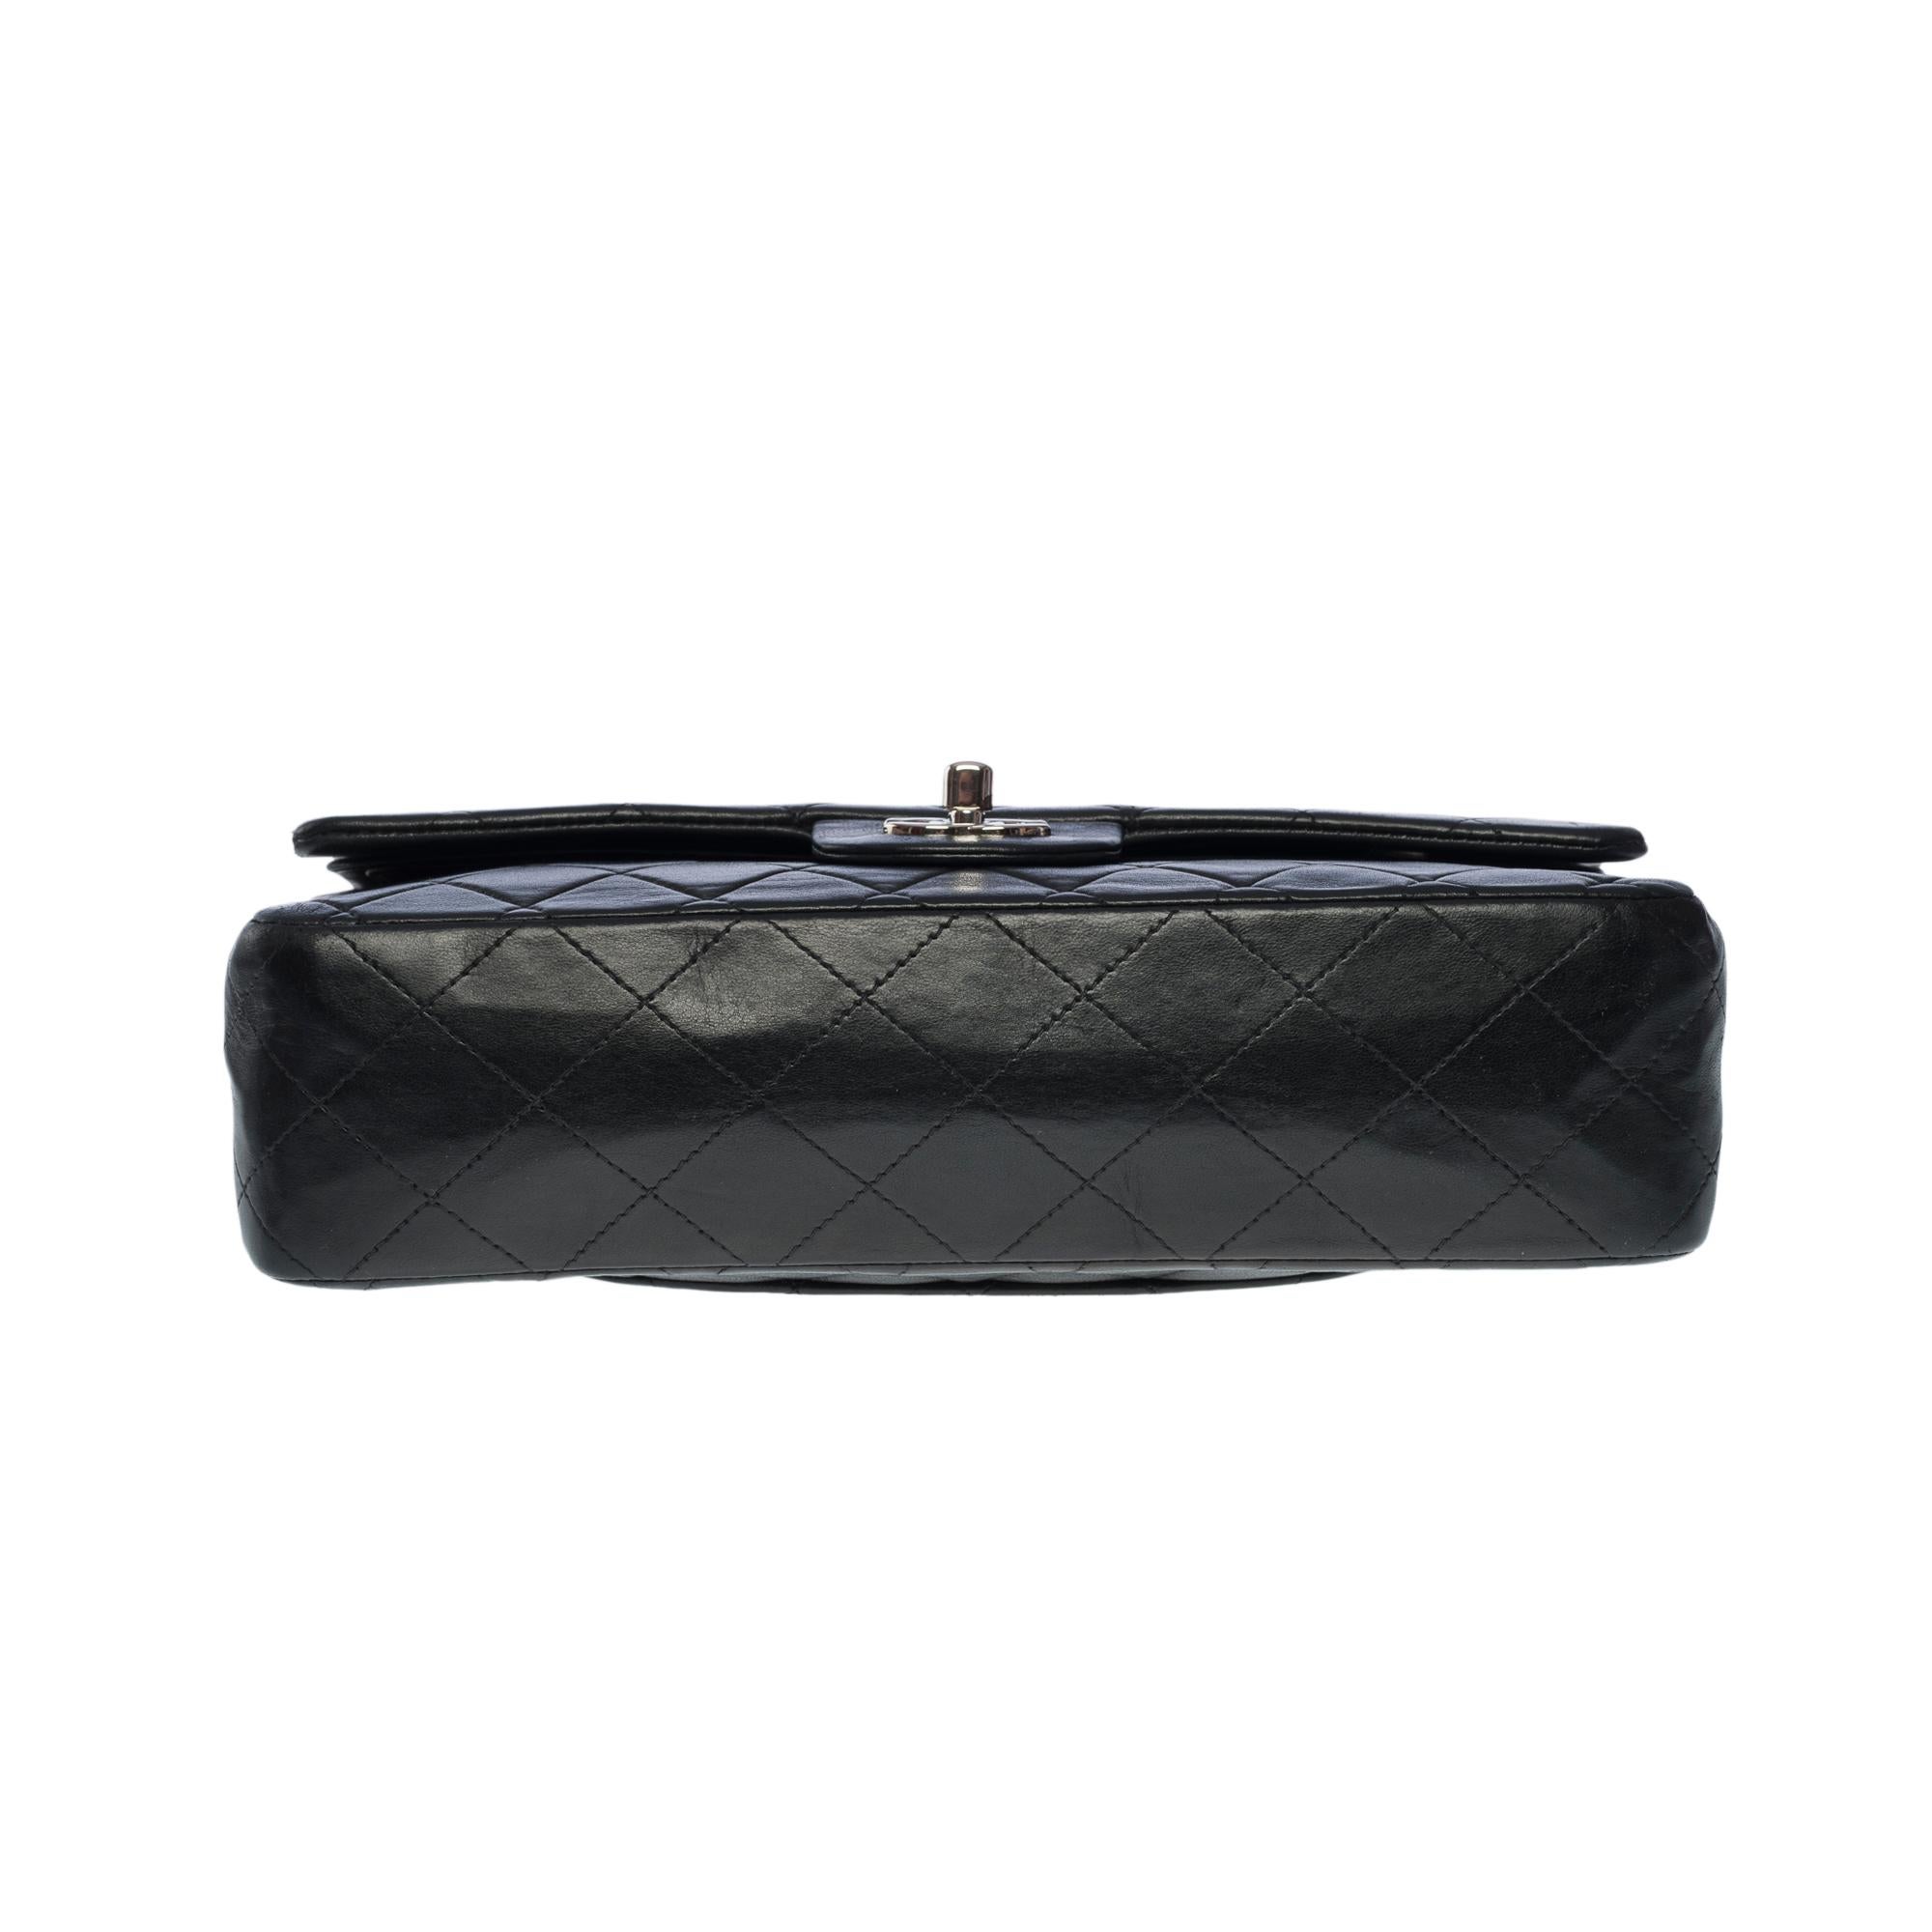 Chanel Timeless Medium 25cm double flap shoulder bag in black lambskin, SHW 4